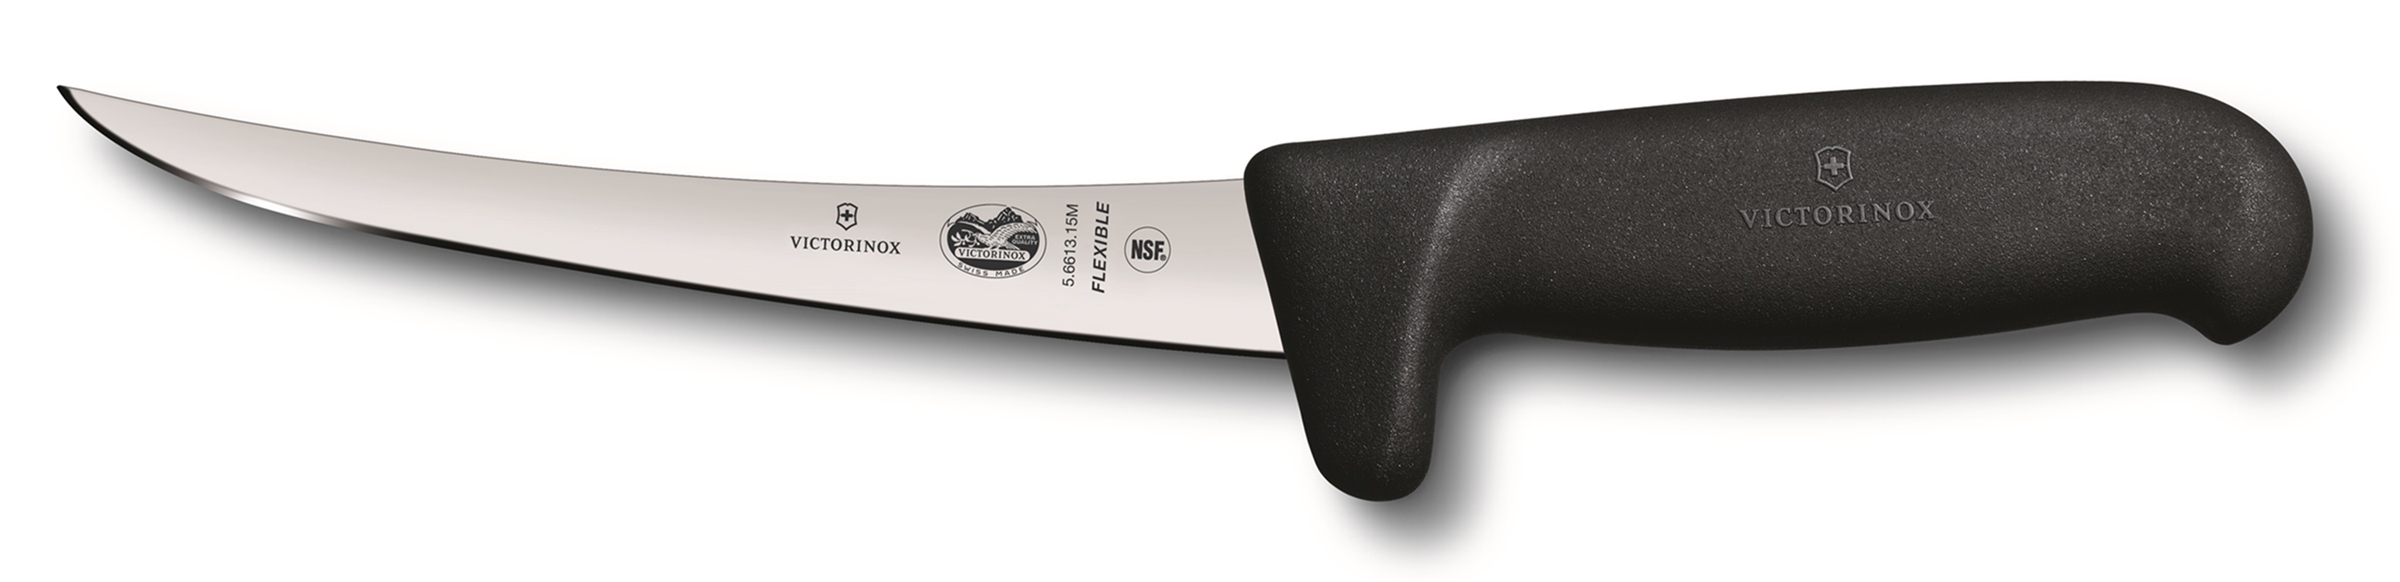 Victorinox Fibrox Safety Grip Boning Knife With Flexible Blade 15cm 5 6613 15m